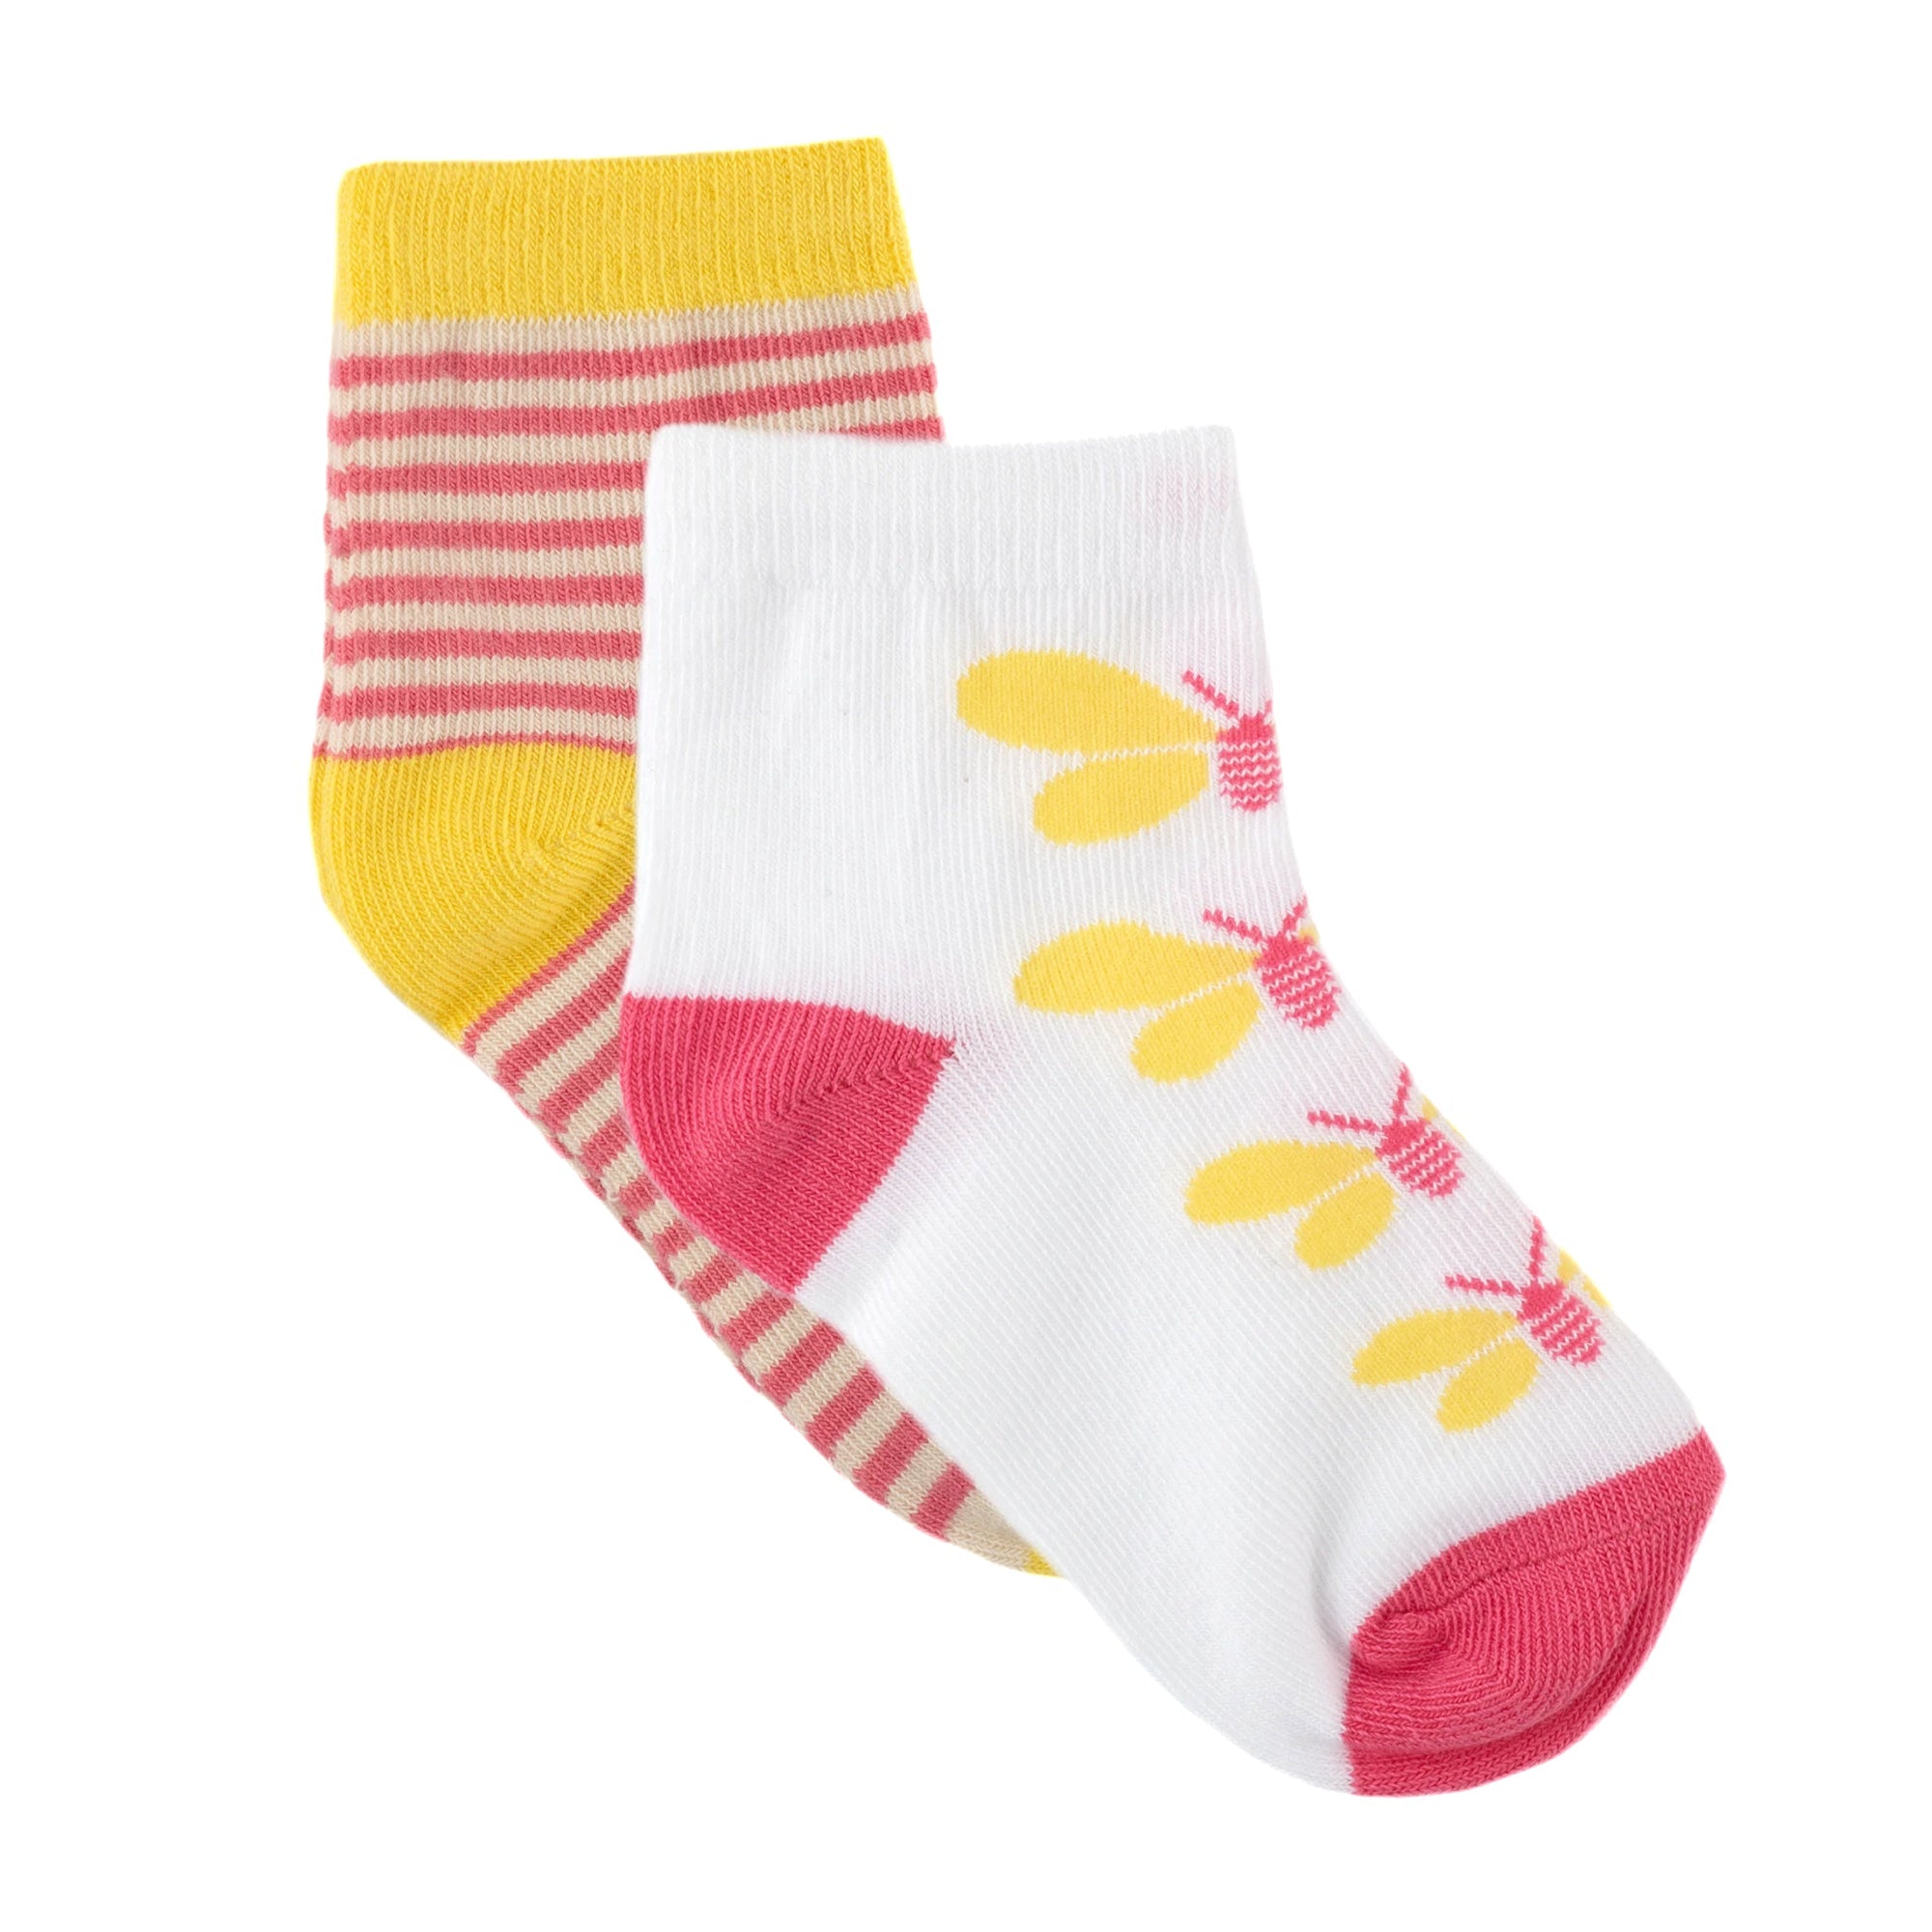 Nuluv Girls Ankle Length Socks (Pack of 2) - Toys4All.in